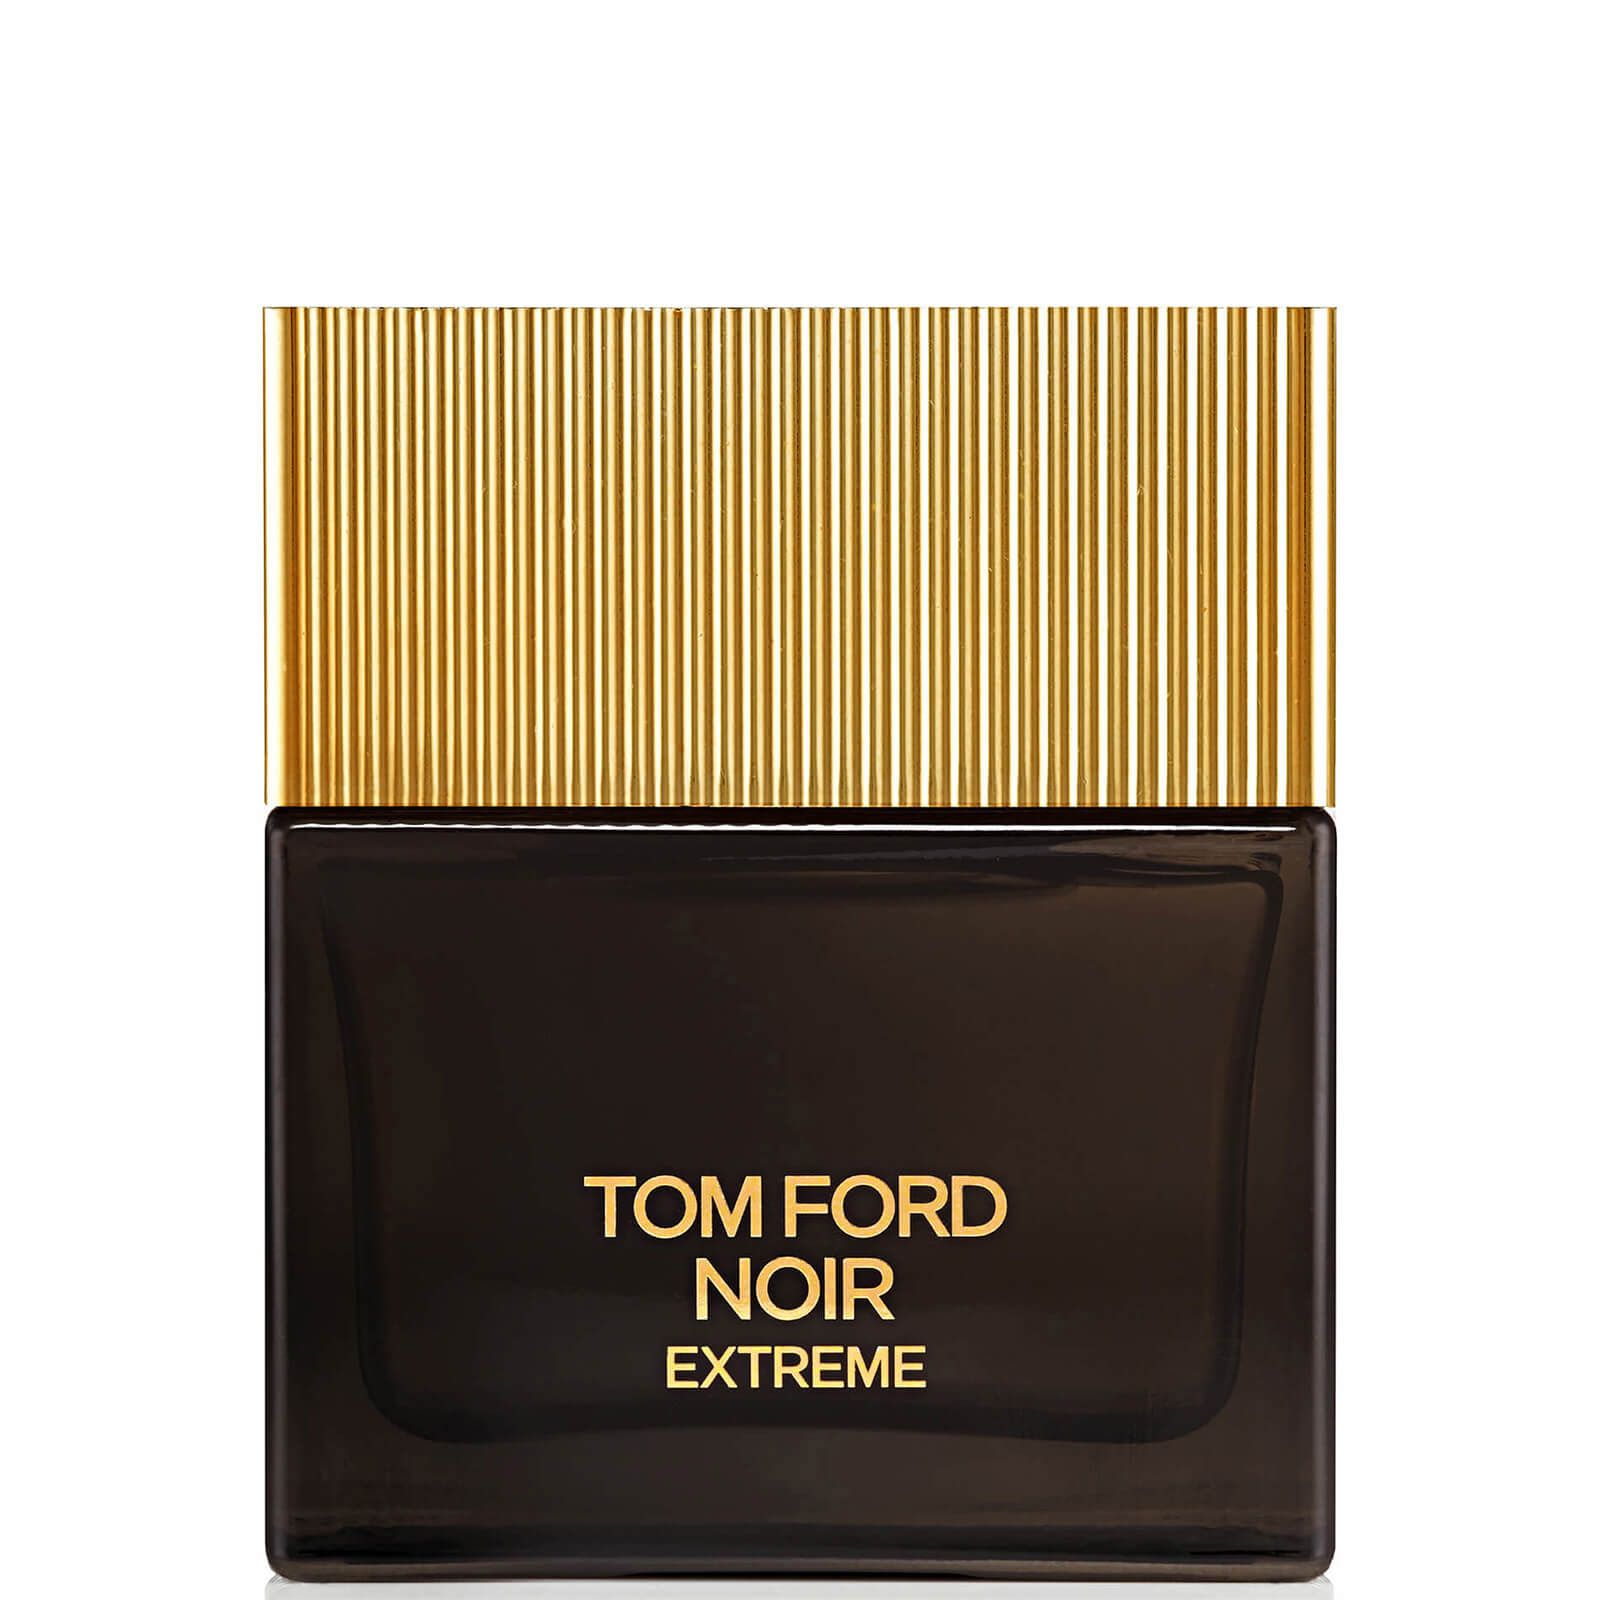 Том форд рандеву. Tom Ford Noir extreme 100ml. Tom Ford Noir extreme Parfum. Духи Tom Ford Noir extreme. Tom Ford Noir extreme 100.